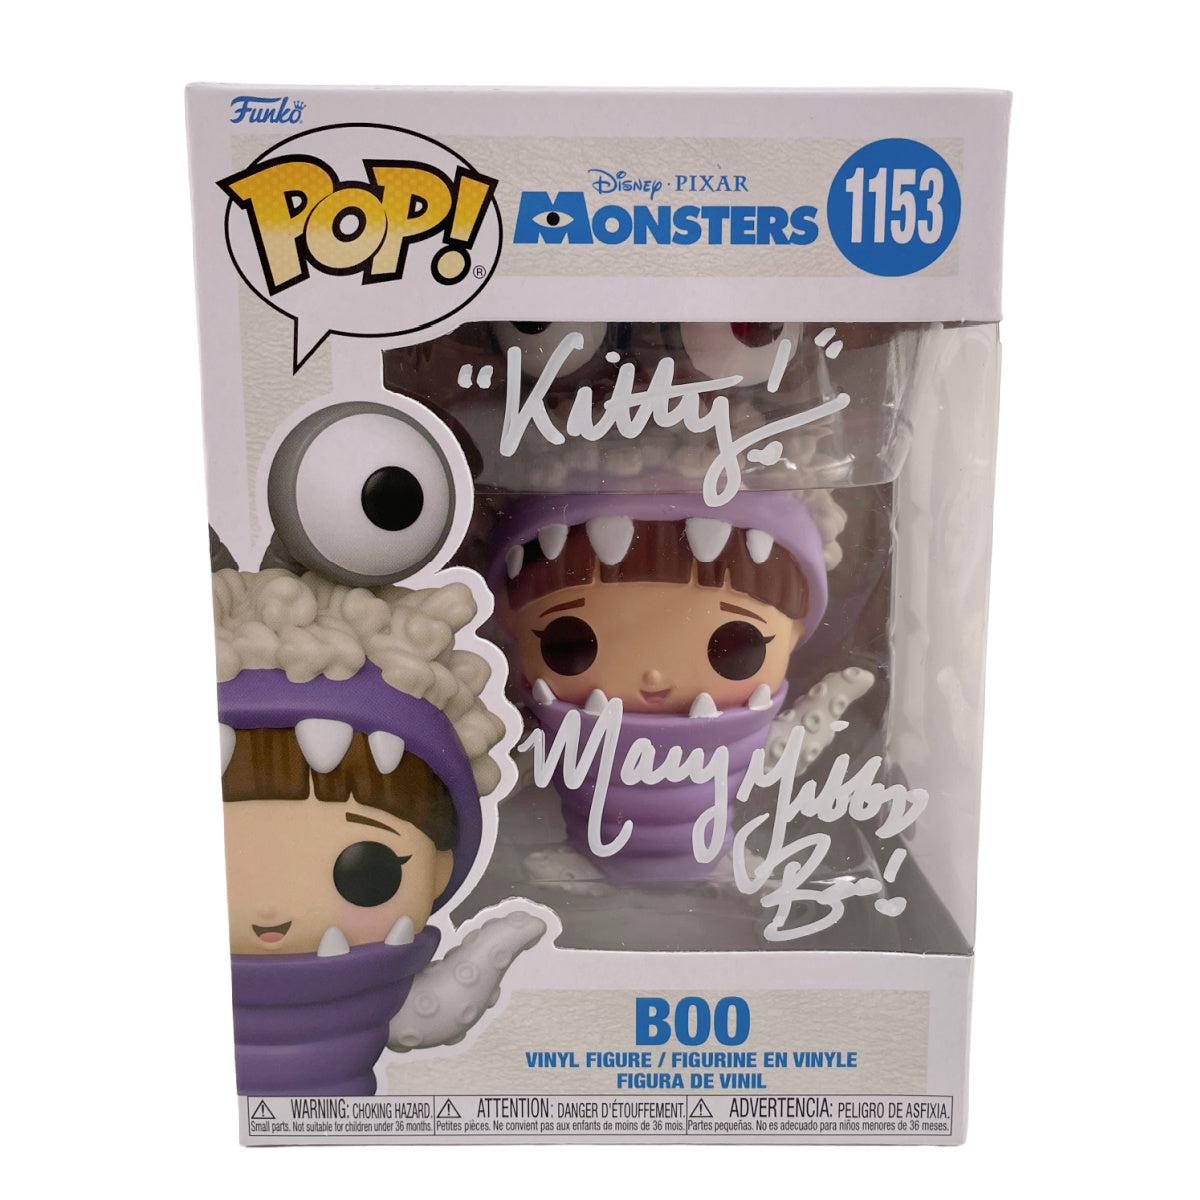 Mary Gibbs Signed Funko POP Disney Pixar Monsters 1153 Boo Autographed JSA 9